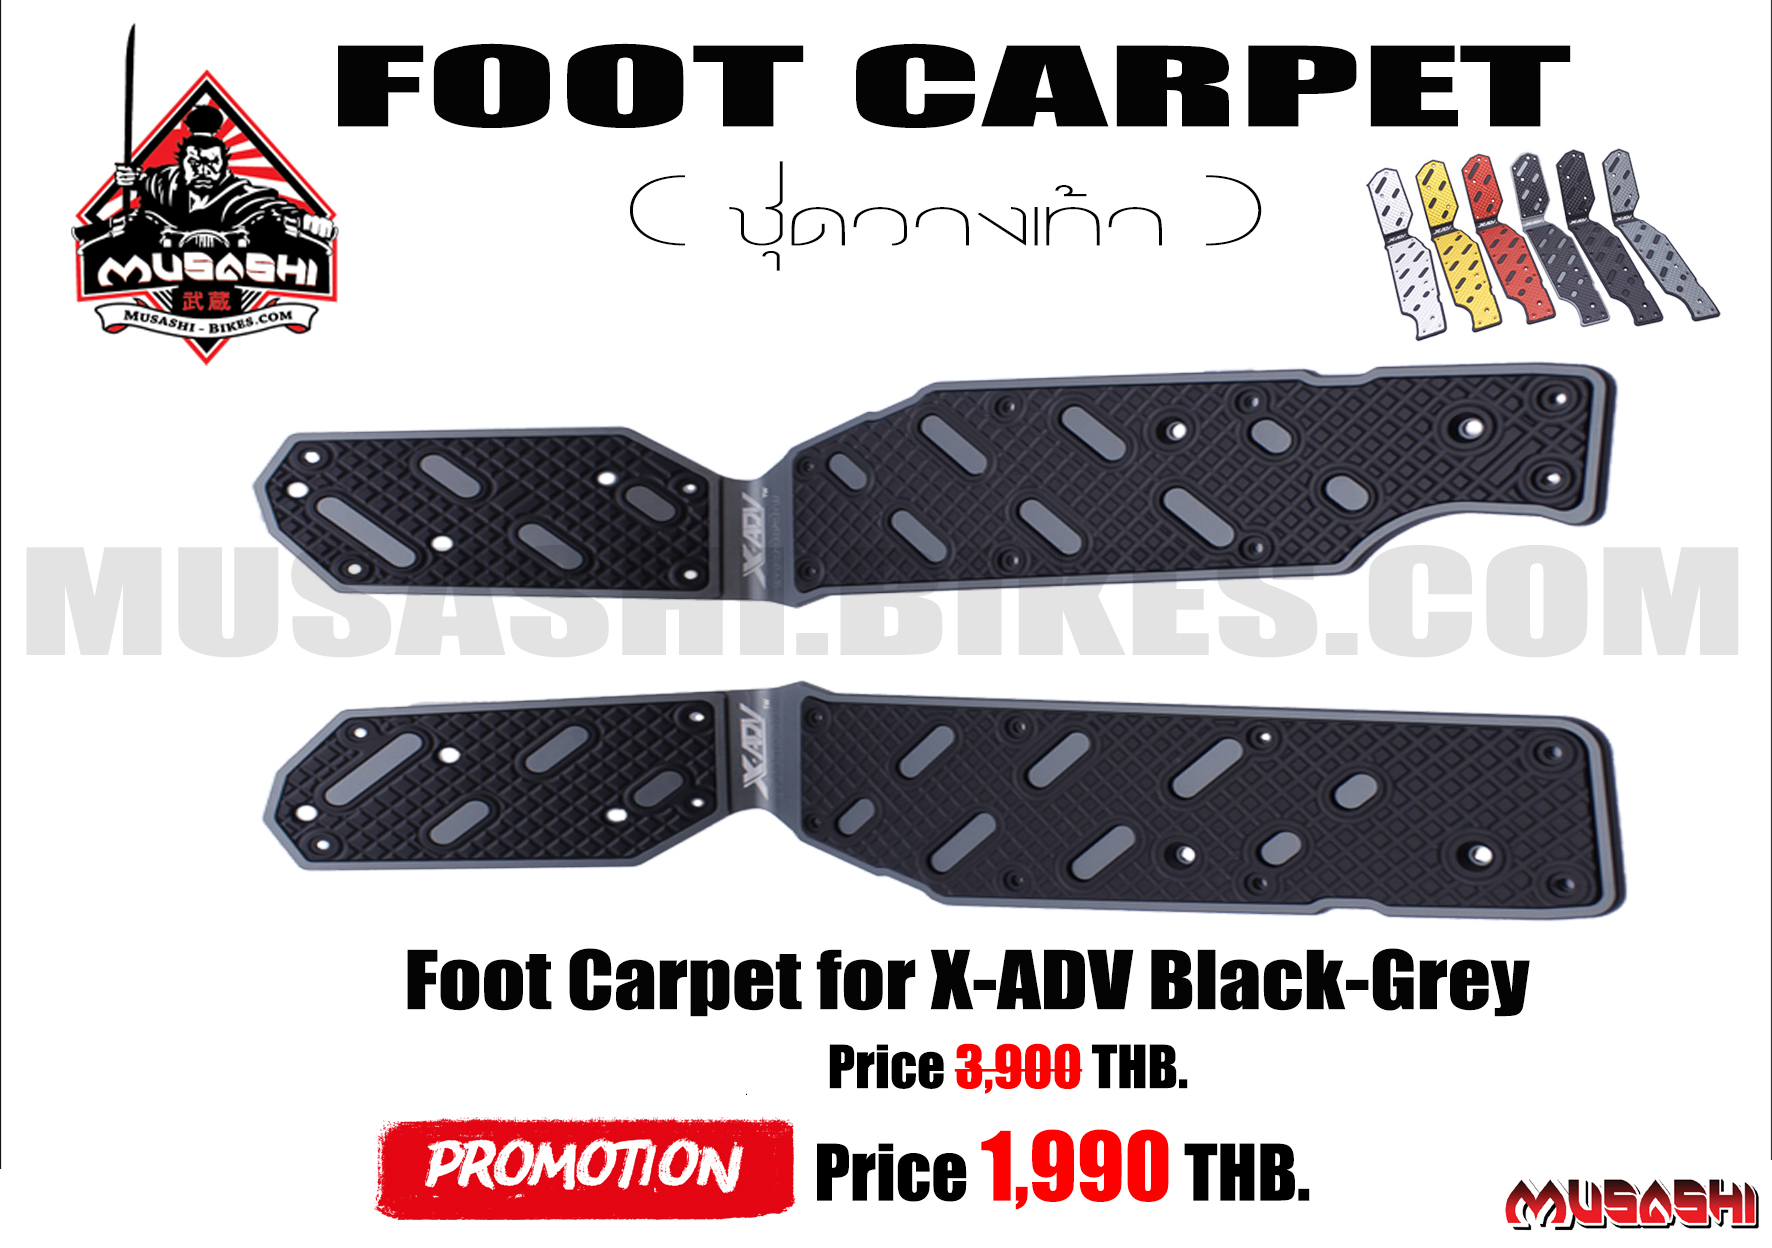 Foot Carpet For X-ADV 750cc. - Grey-Black